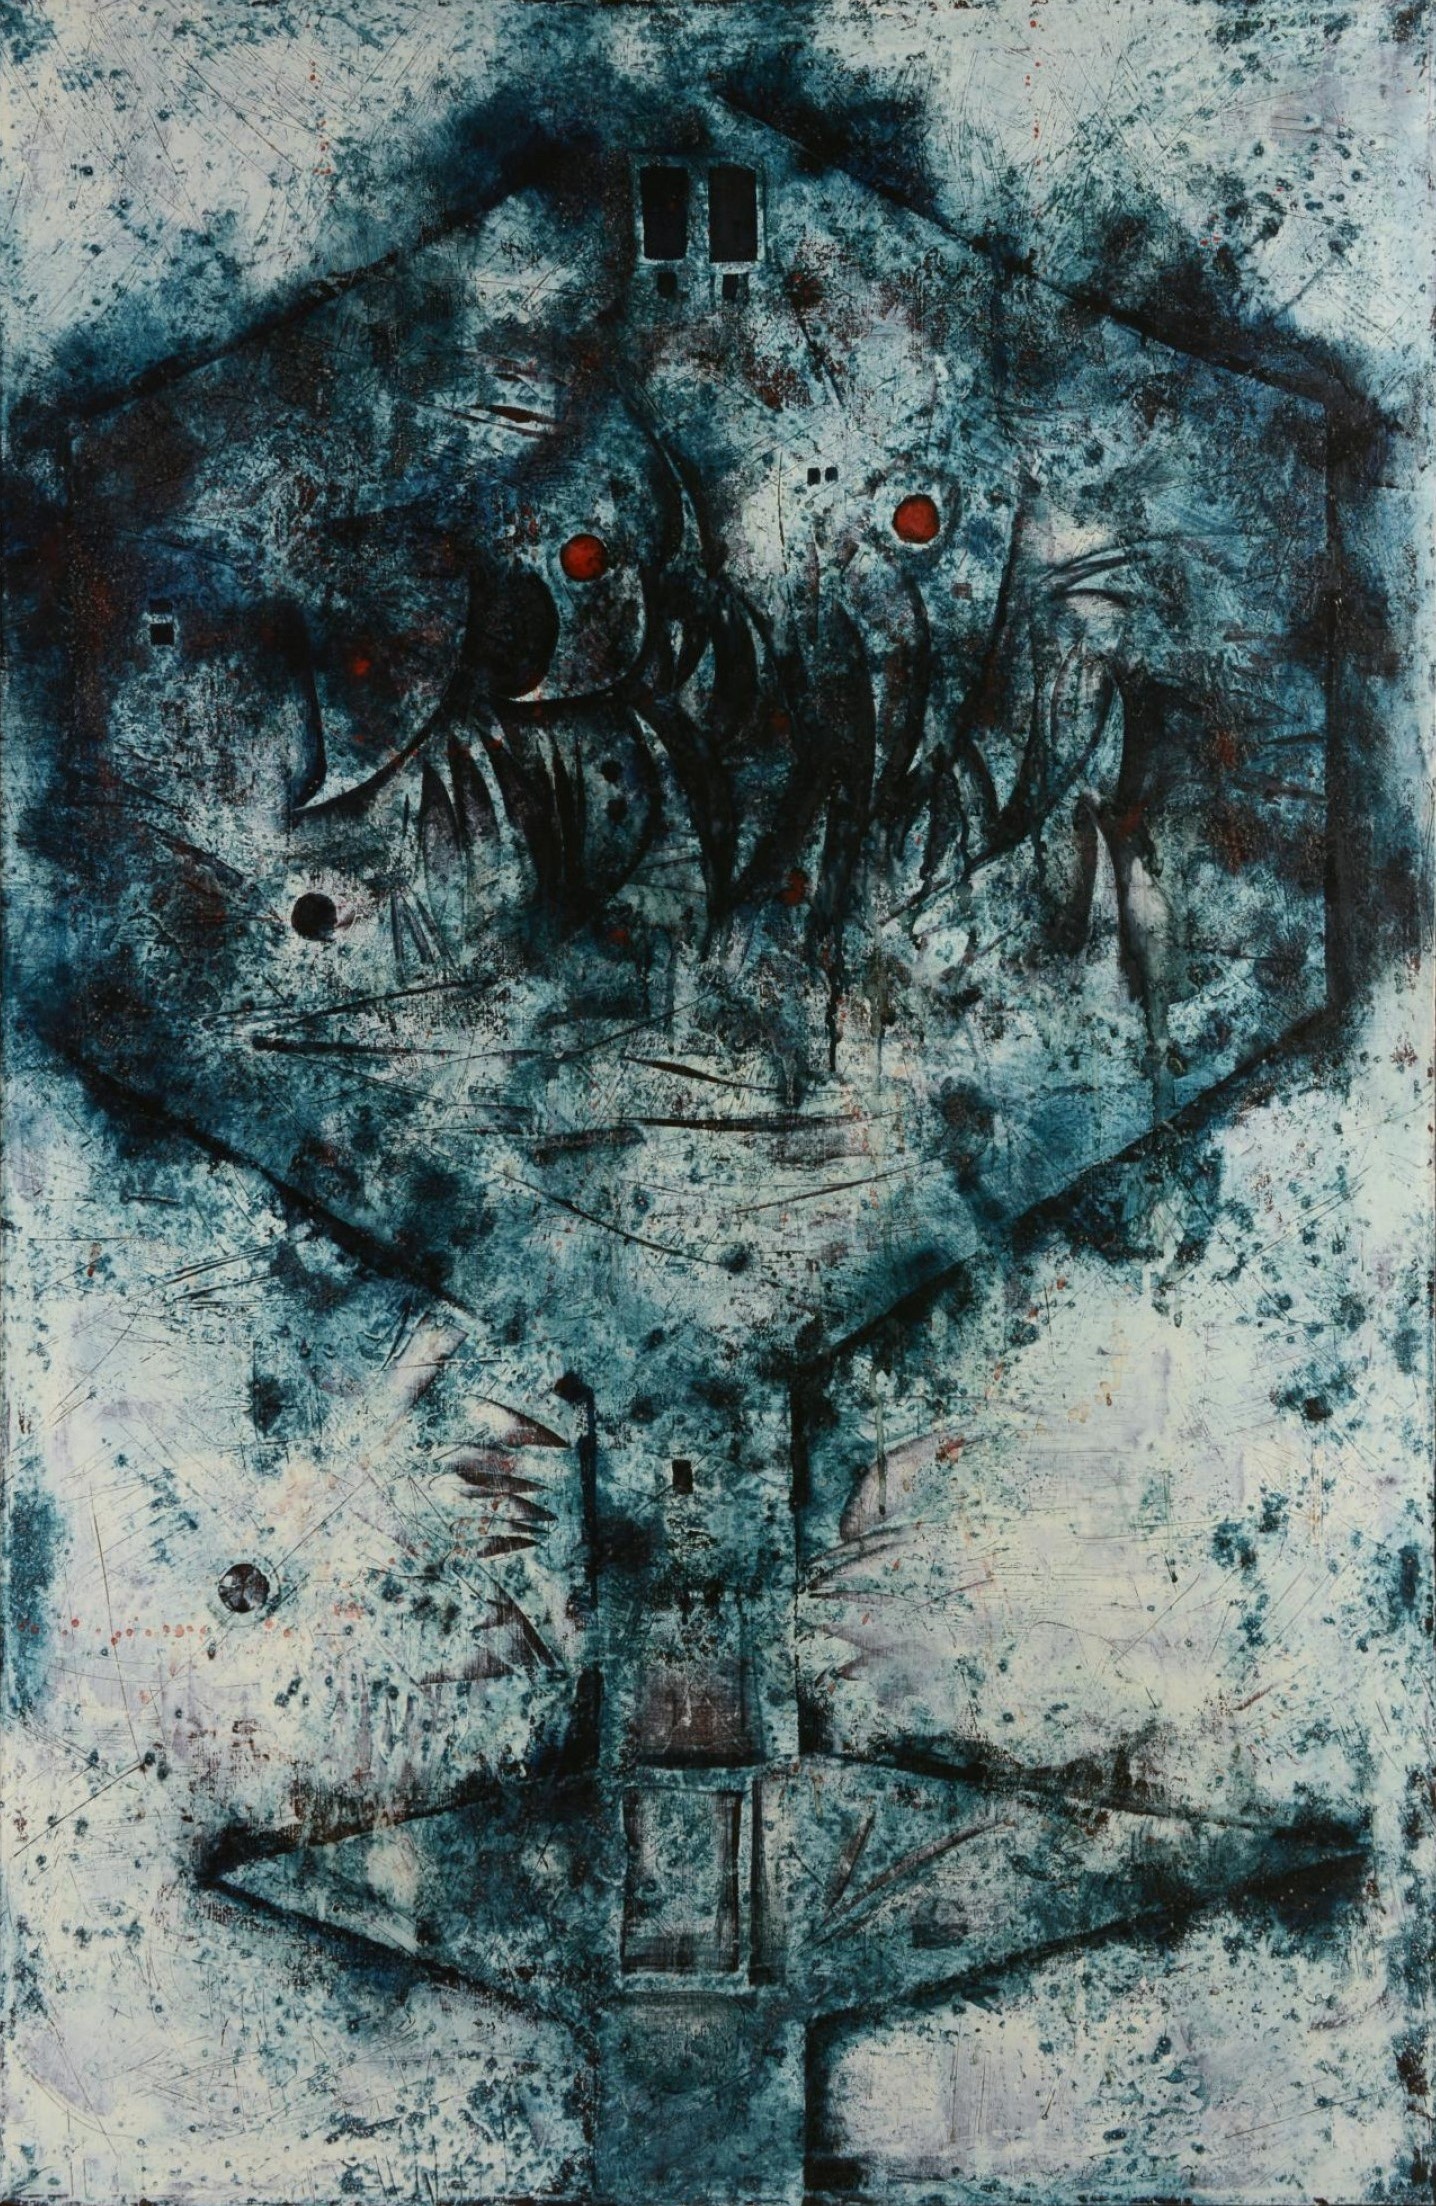 Mikuláš Medek: Malý modrý nudný (též smutný) obraz, 1966, kombinovaná technika, 130 x 85 cm, Aukční dům Zezula 28. 5. 2022, cena: 6 960 000 Kč